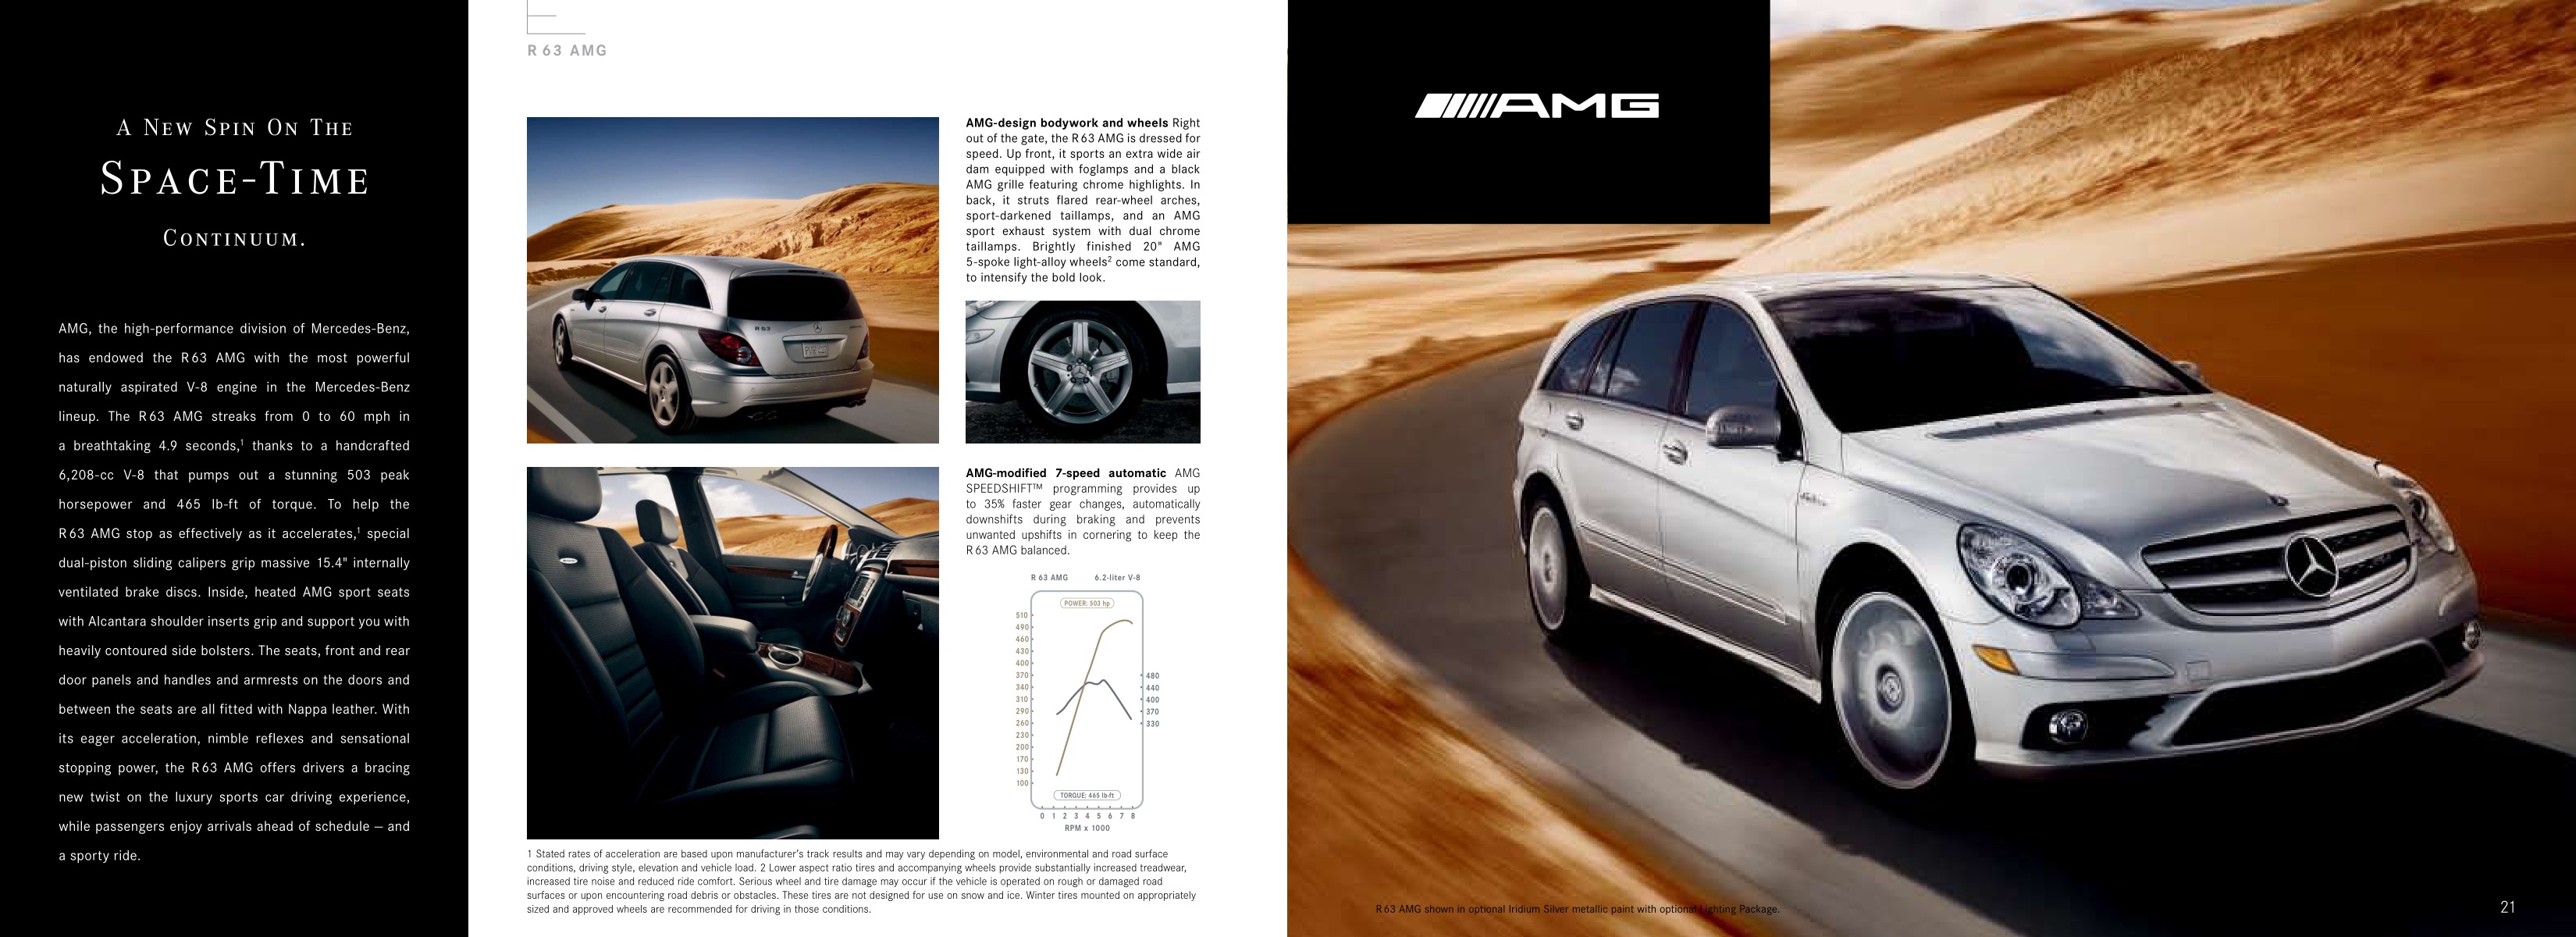 2007 Mercedes-Benz M-Class Brochure Page 3